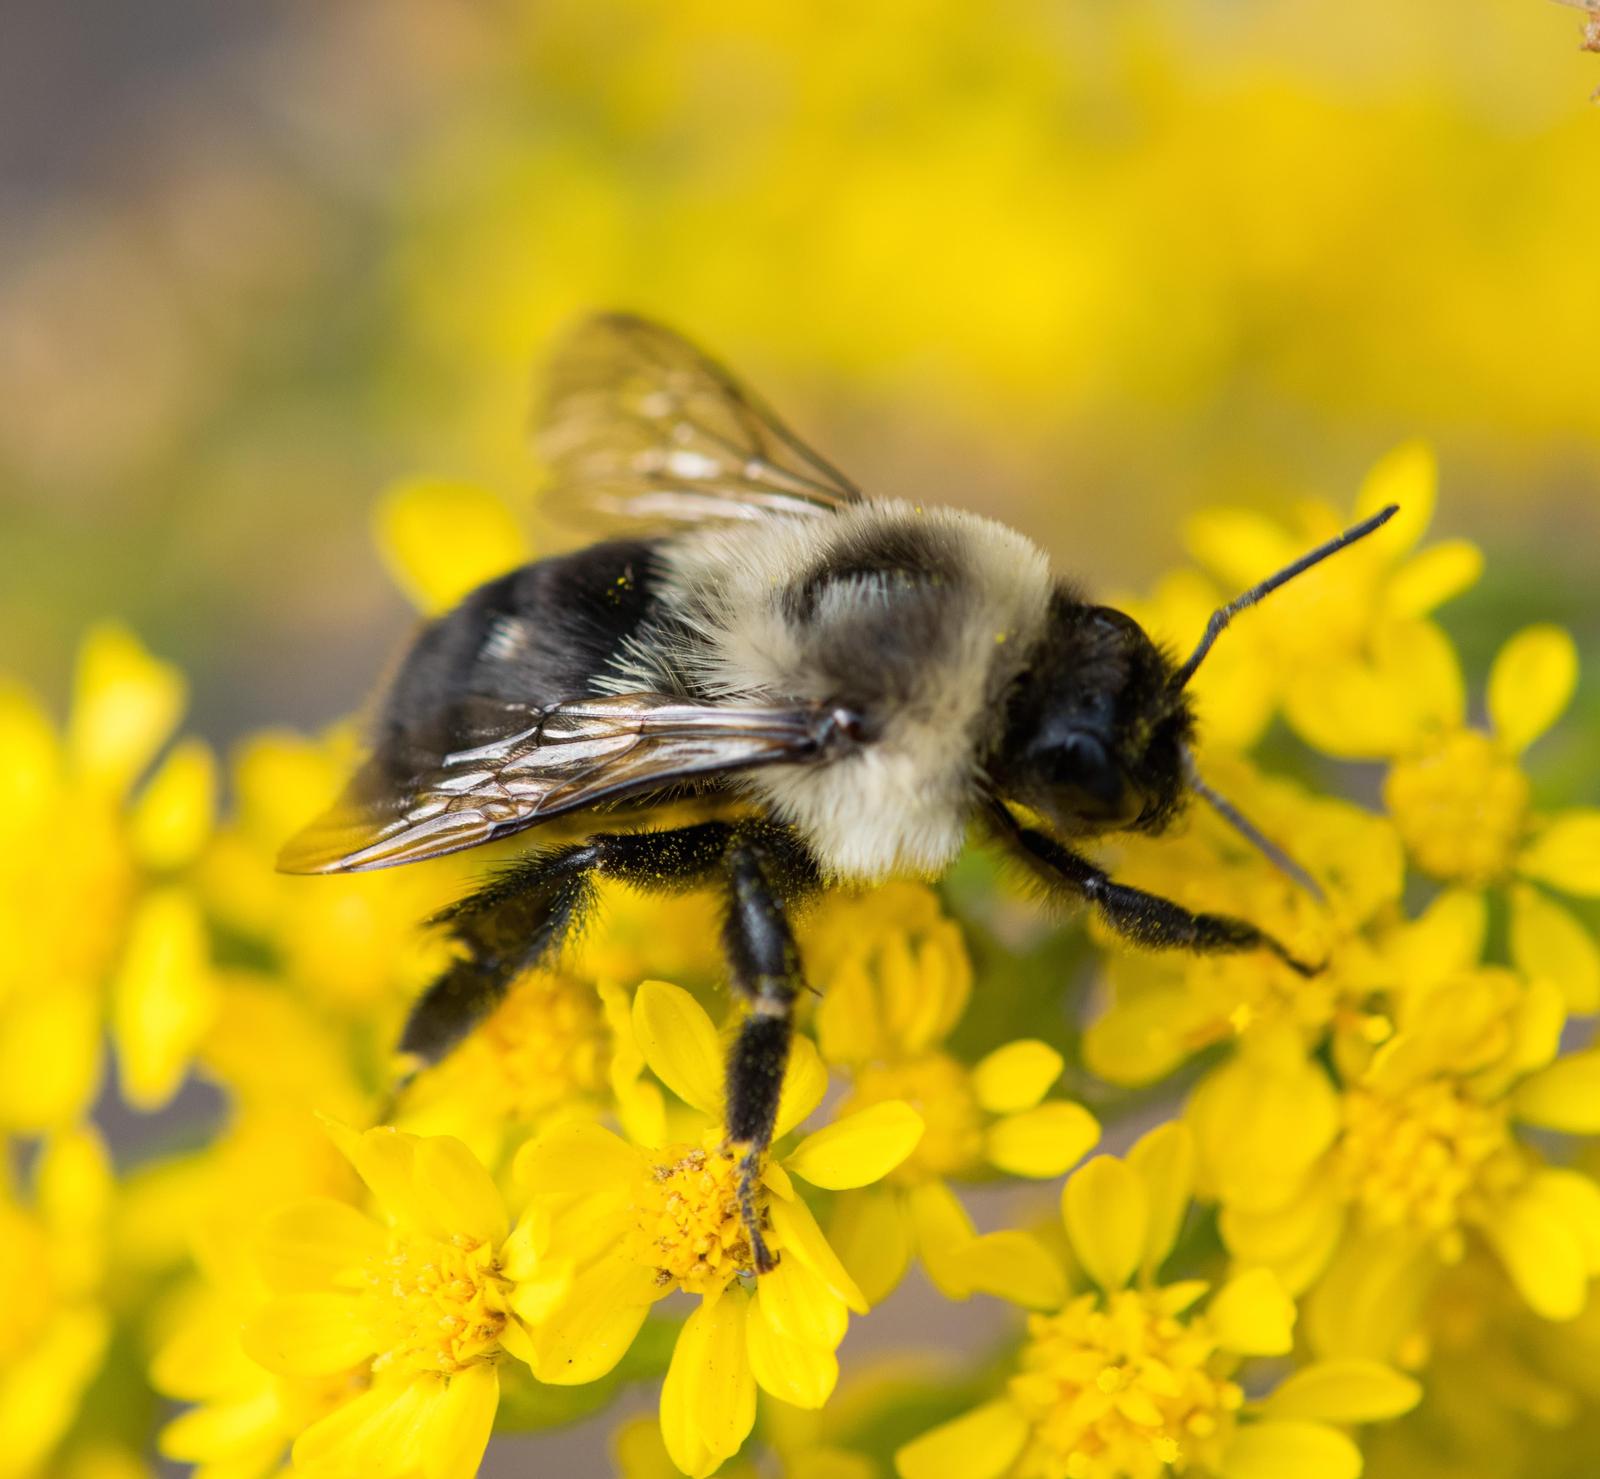 Common eastern bumble bee Photo by Jacob Zadik